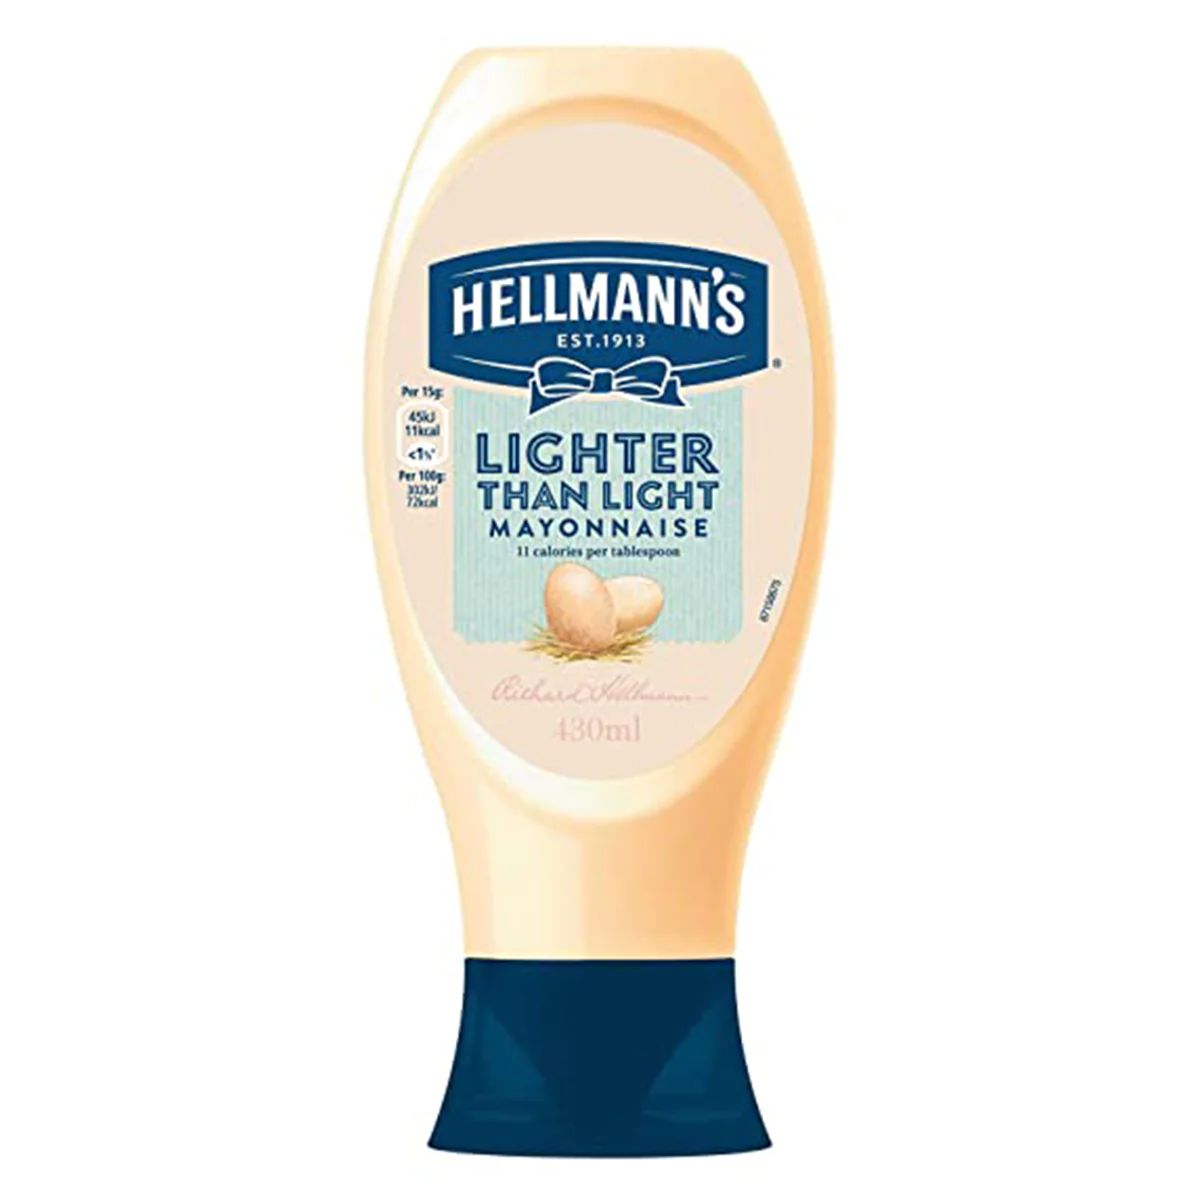 A bottle of Hellmann's - Squeezy Light Mayonnaise - 430ml.